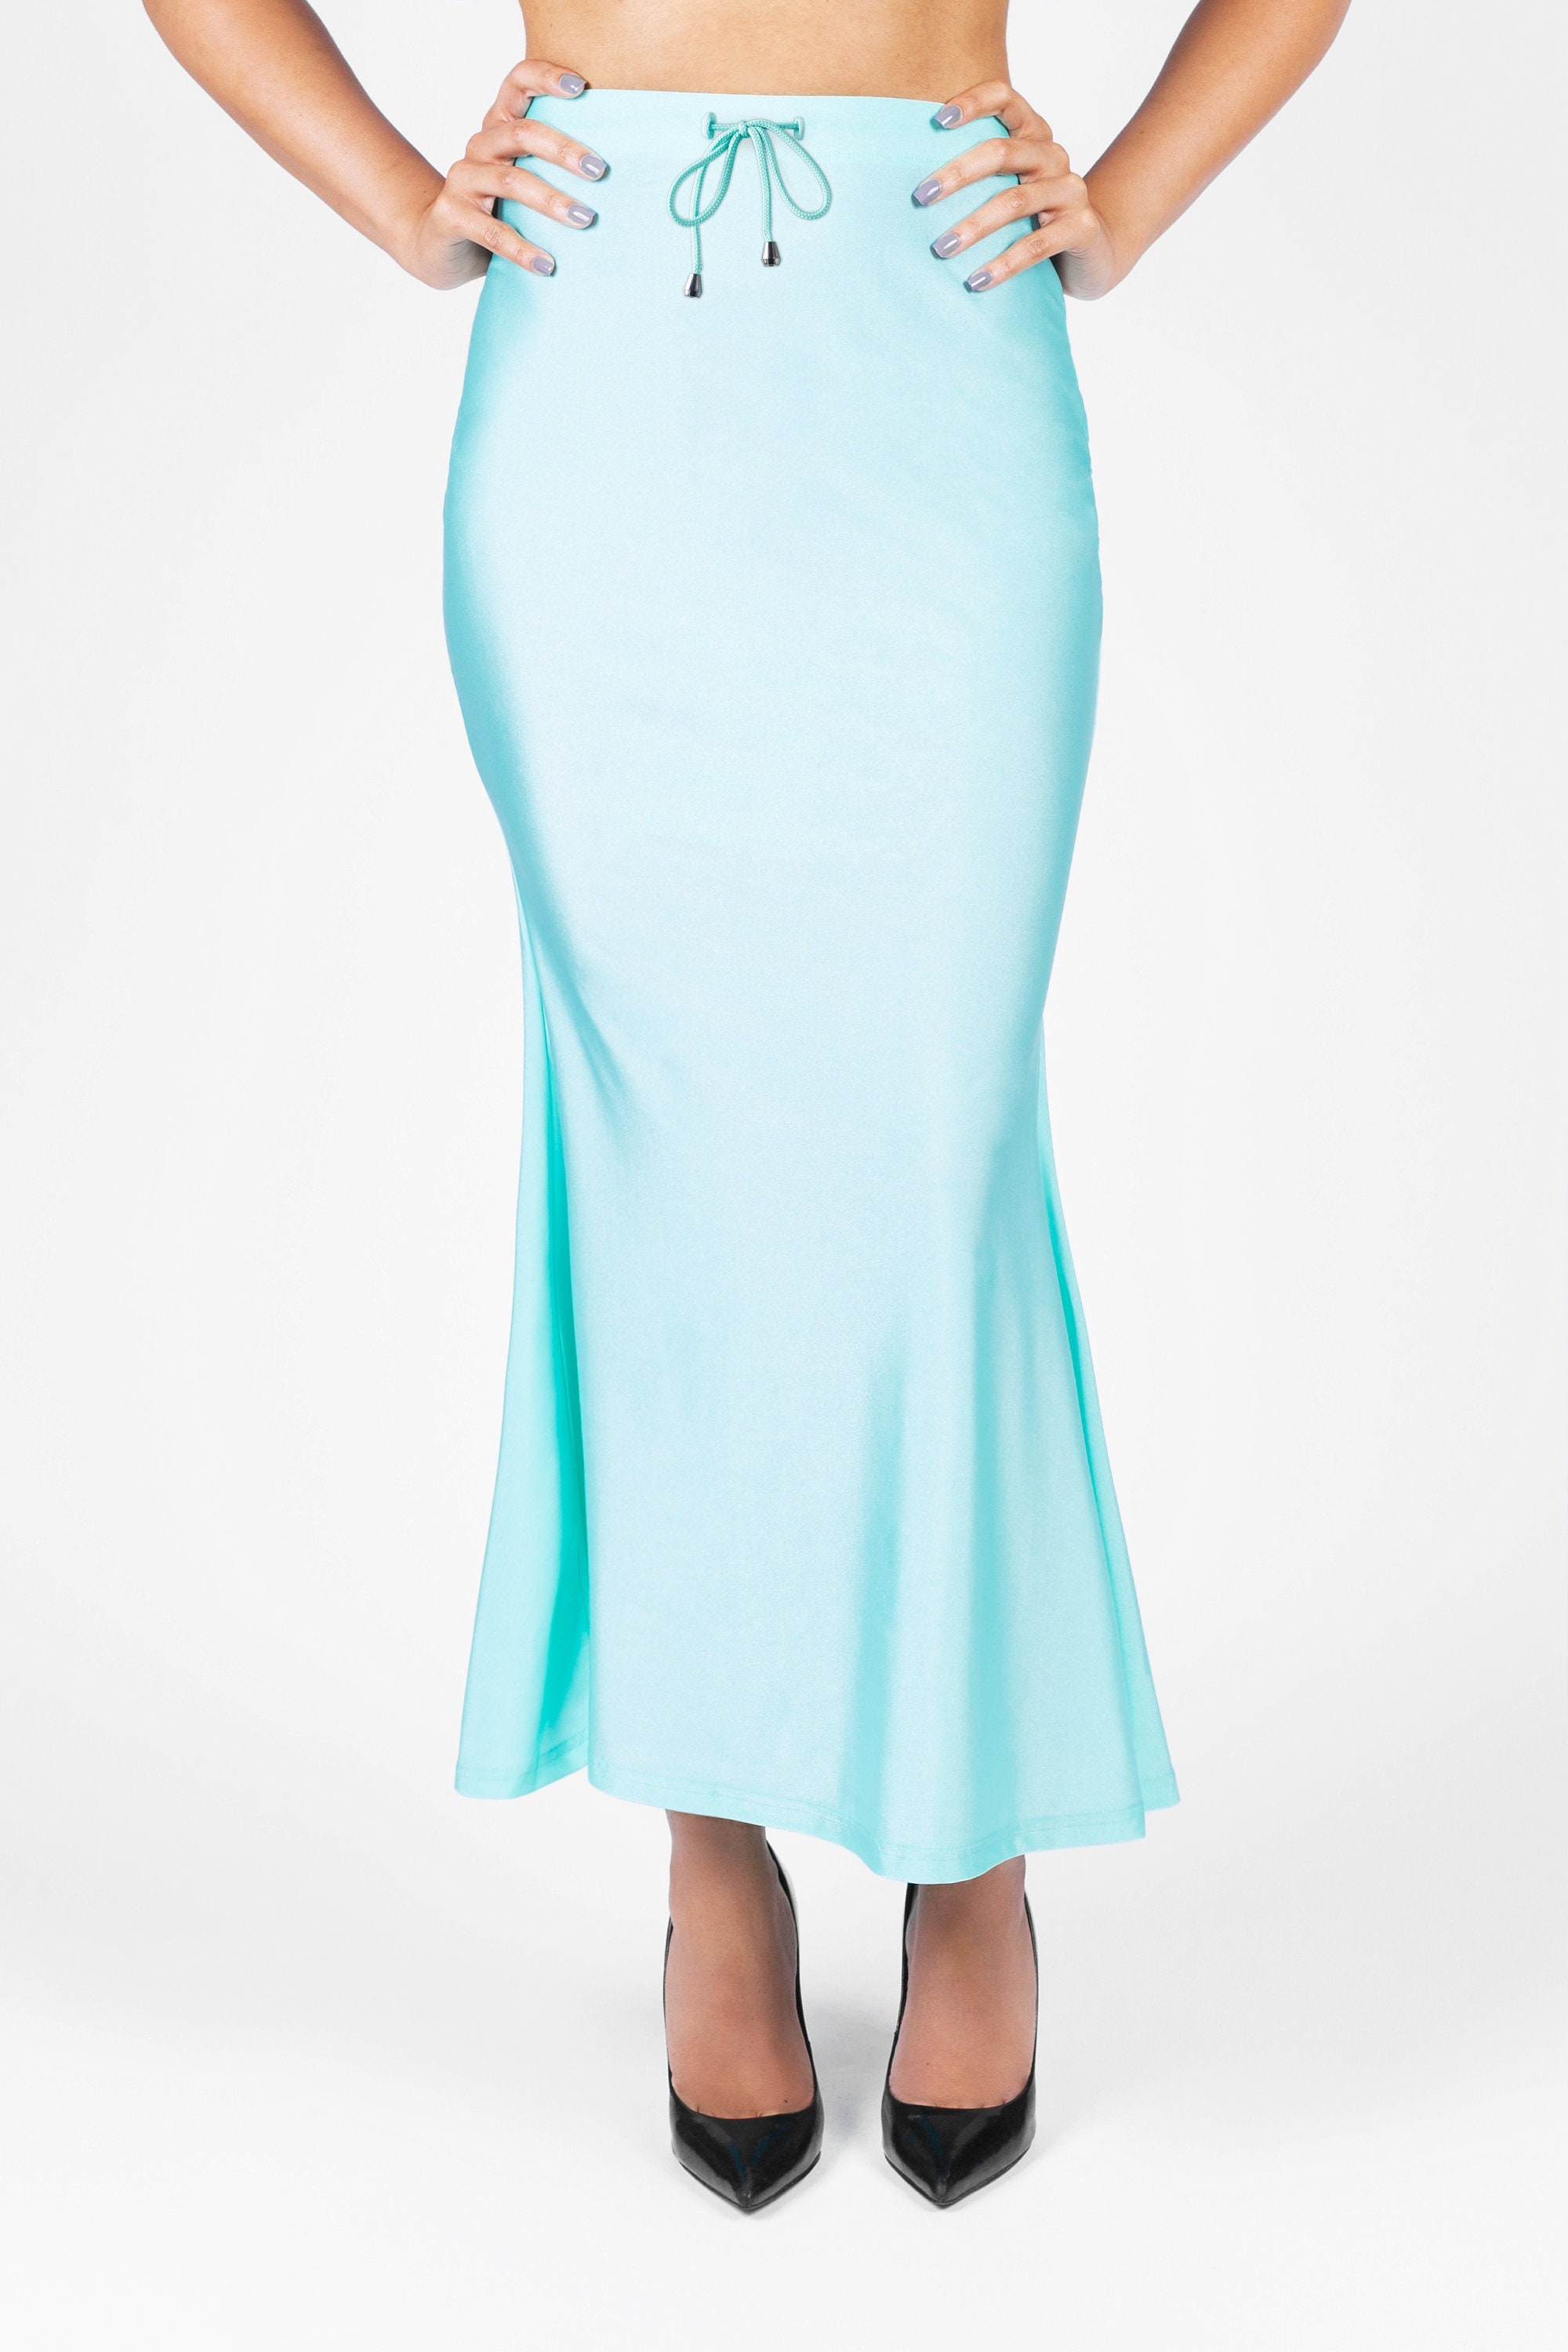 PSQURMART Saree Shapewear Petticoat Cotton Blended Shape Wear